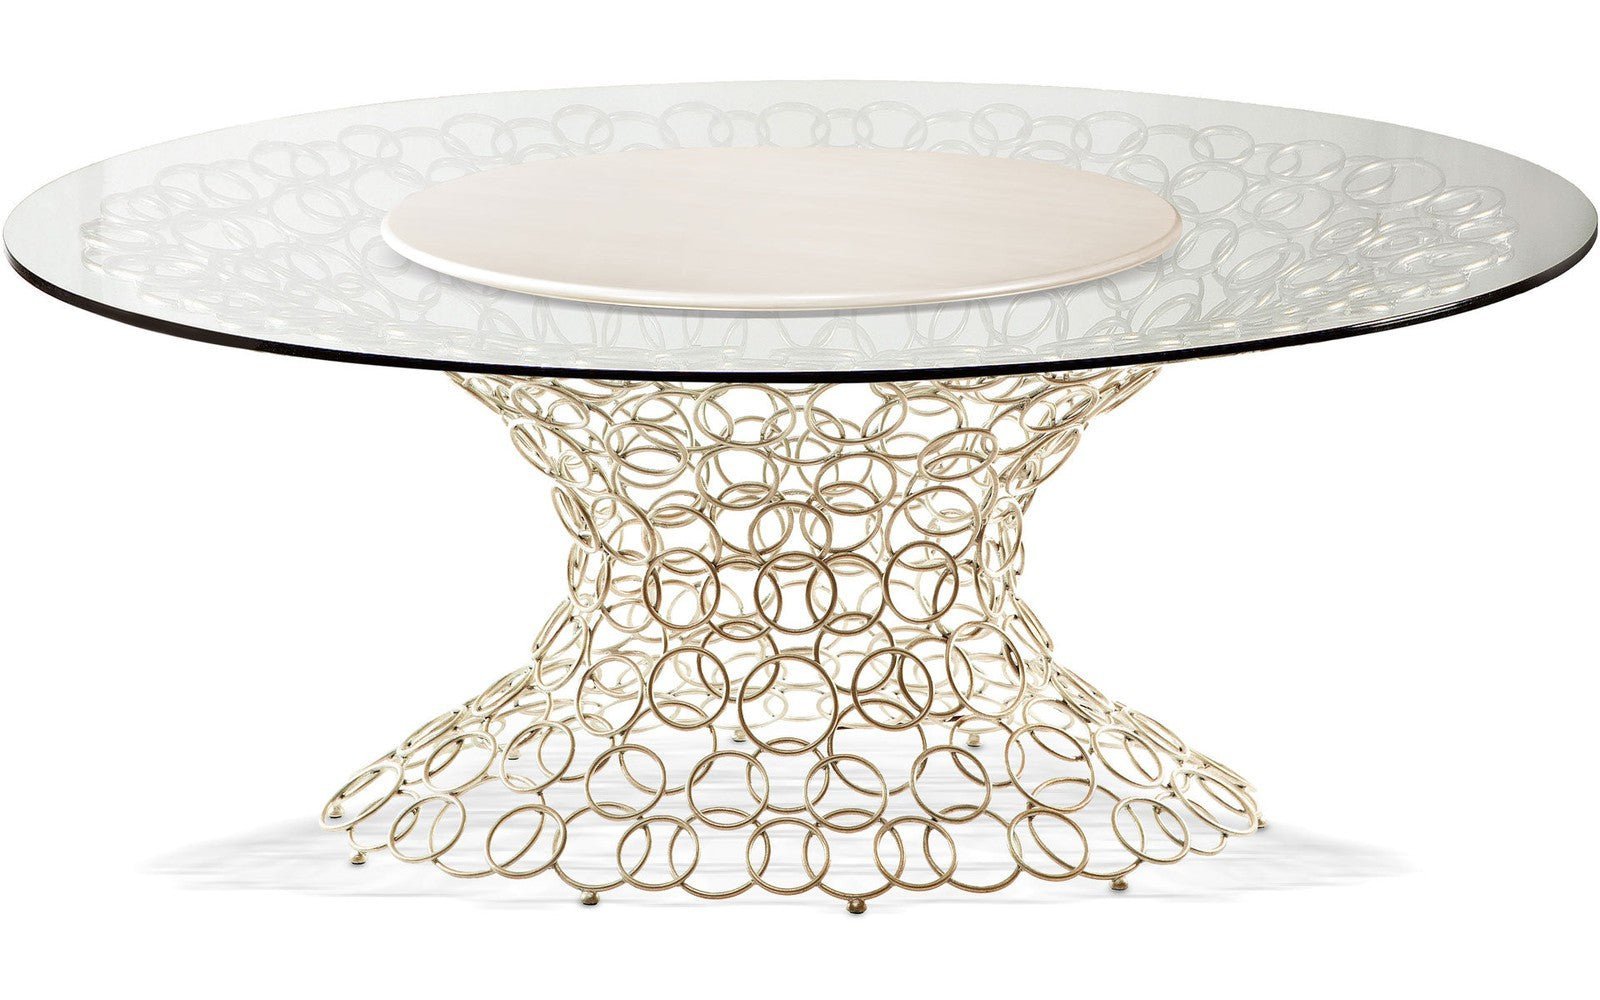 Cantori-Mondrian Art Form Table